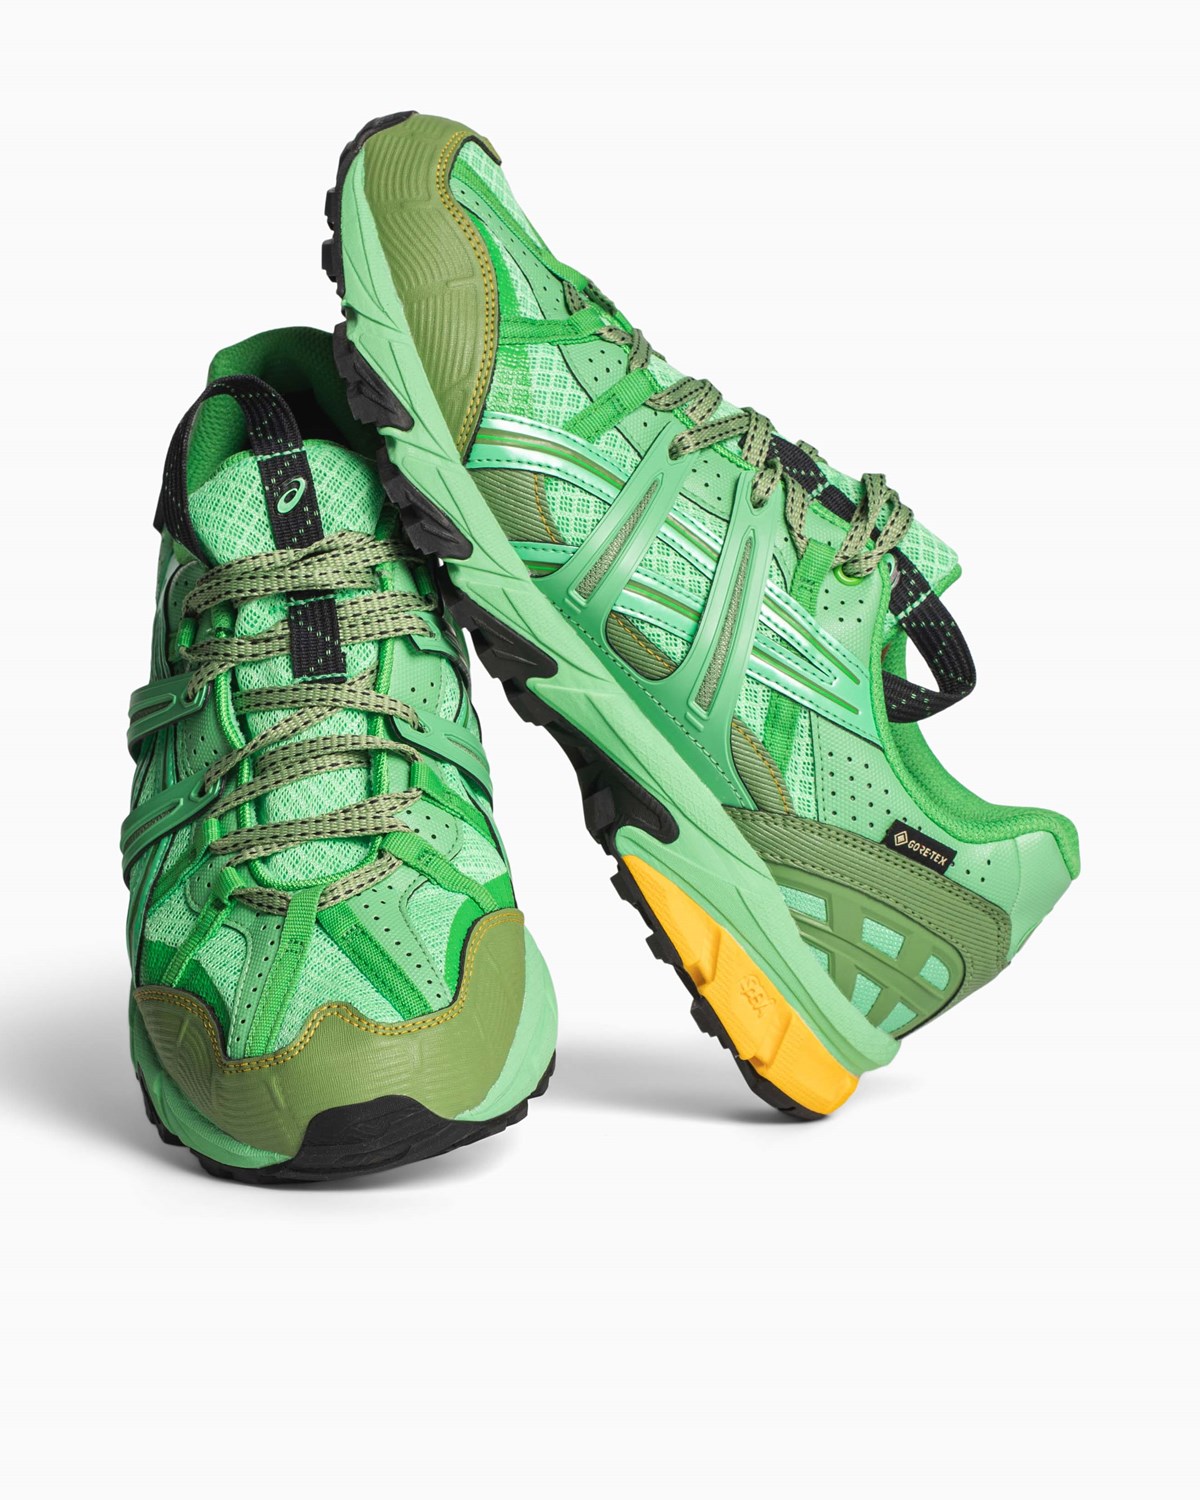 HS4-S Gel Sonoma 15-50 GTX Asics Footwear Sneakers Green